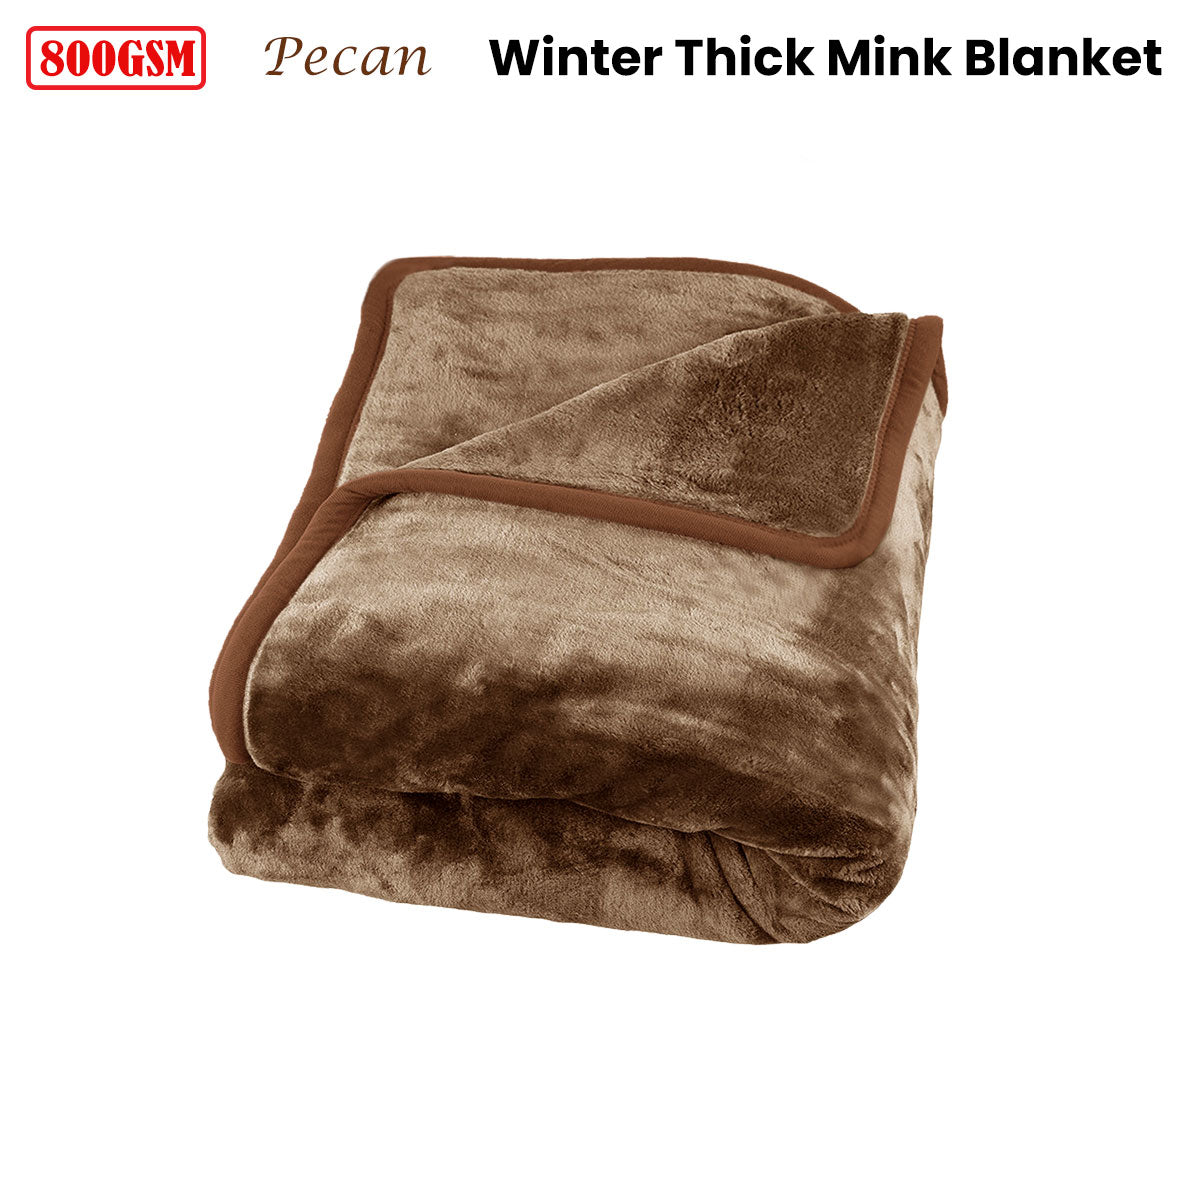 800GSM Luxury Winter Thick Mink Blanket Pecan King